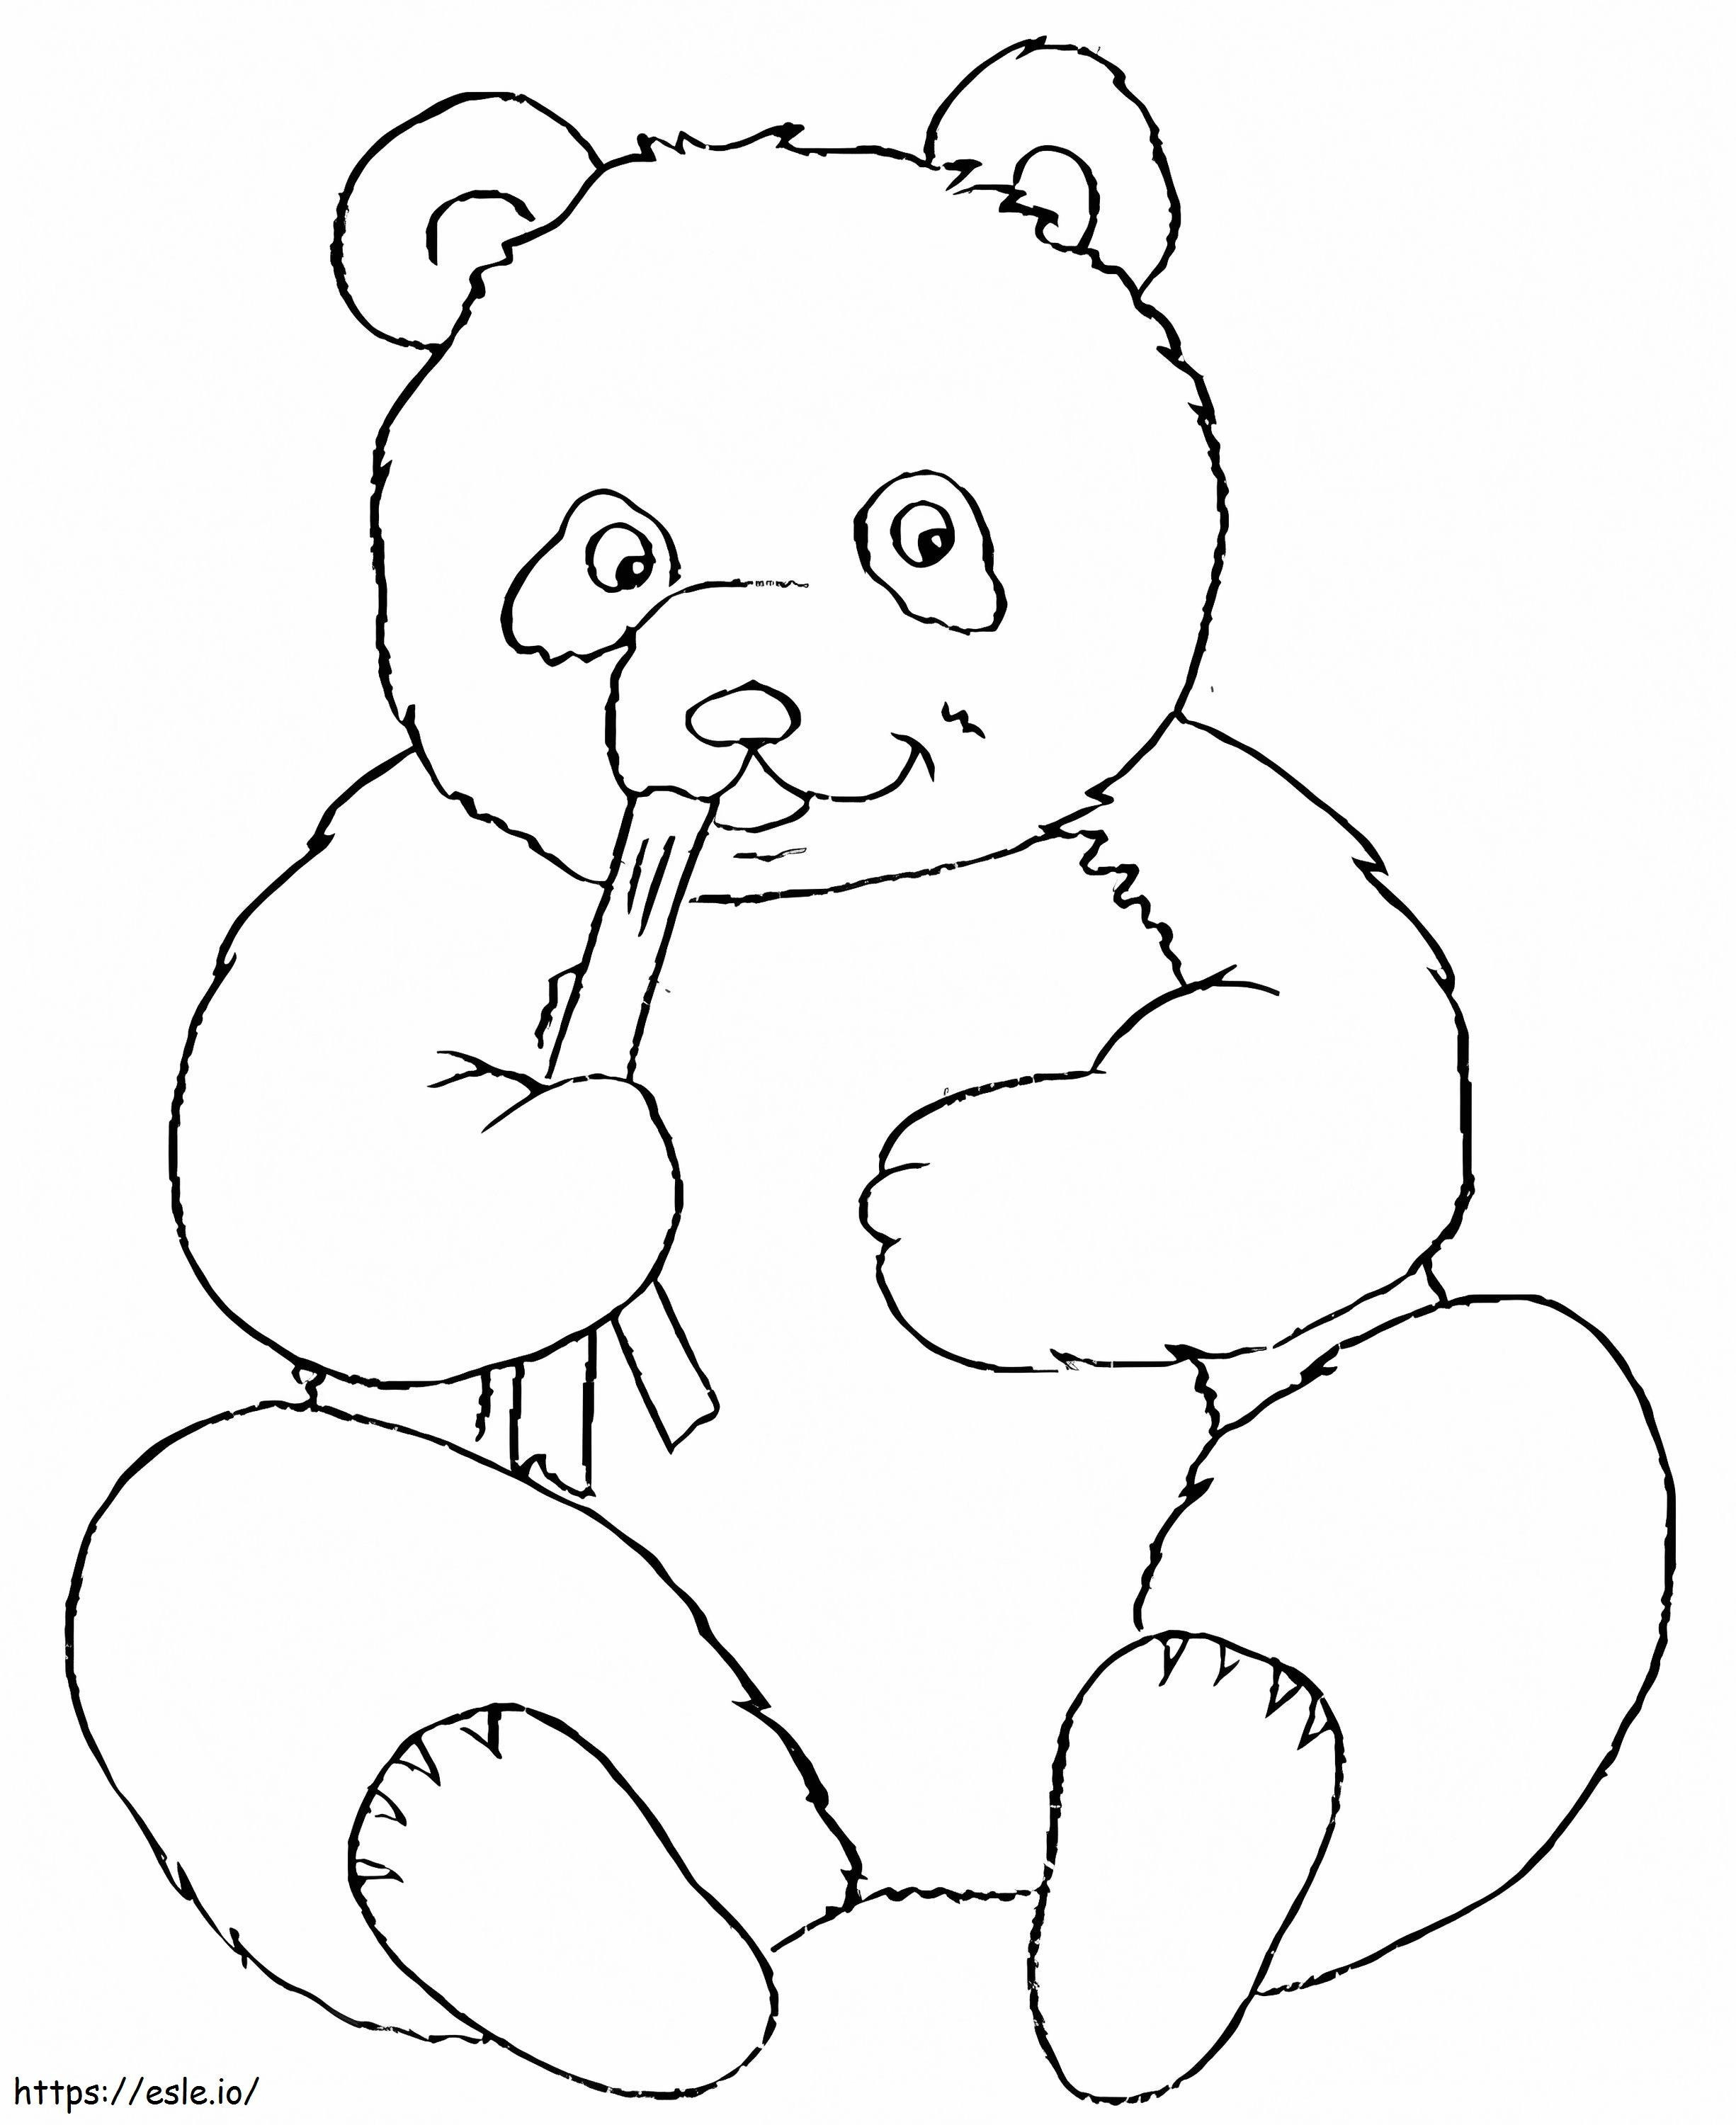 Panda 2 coloring page